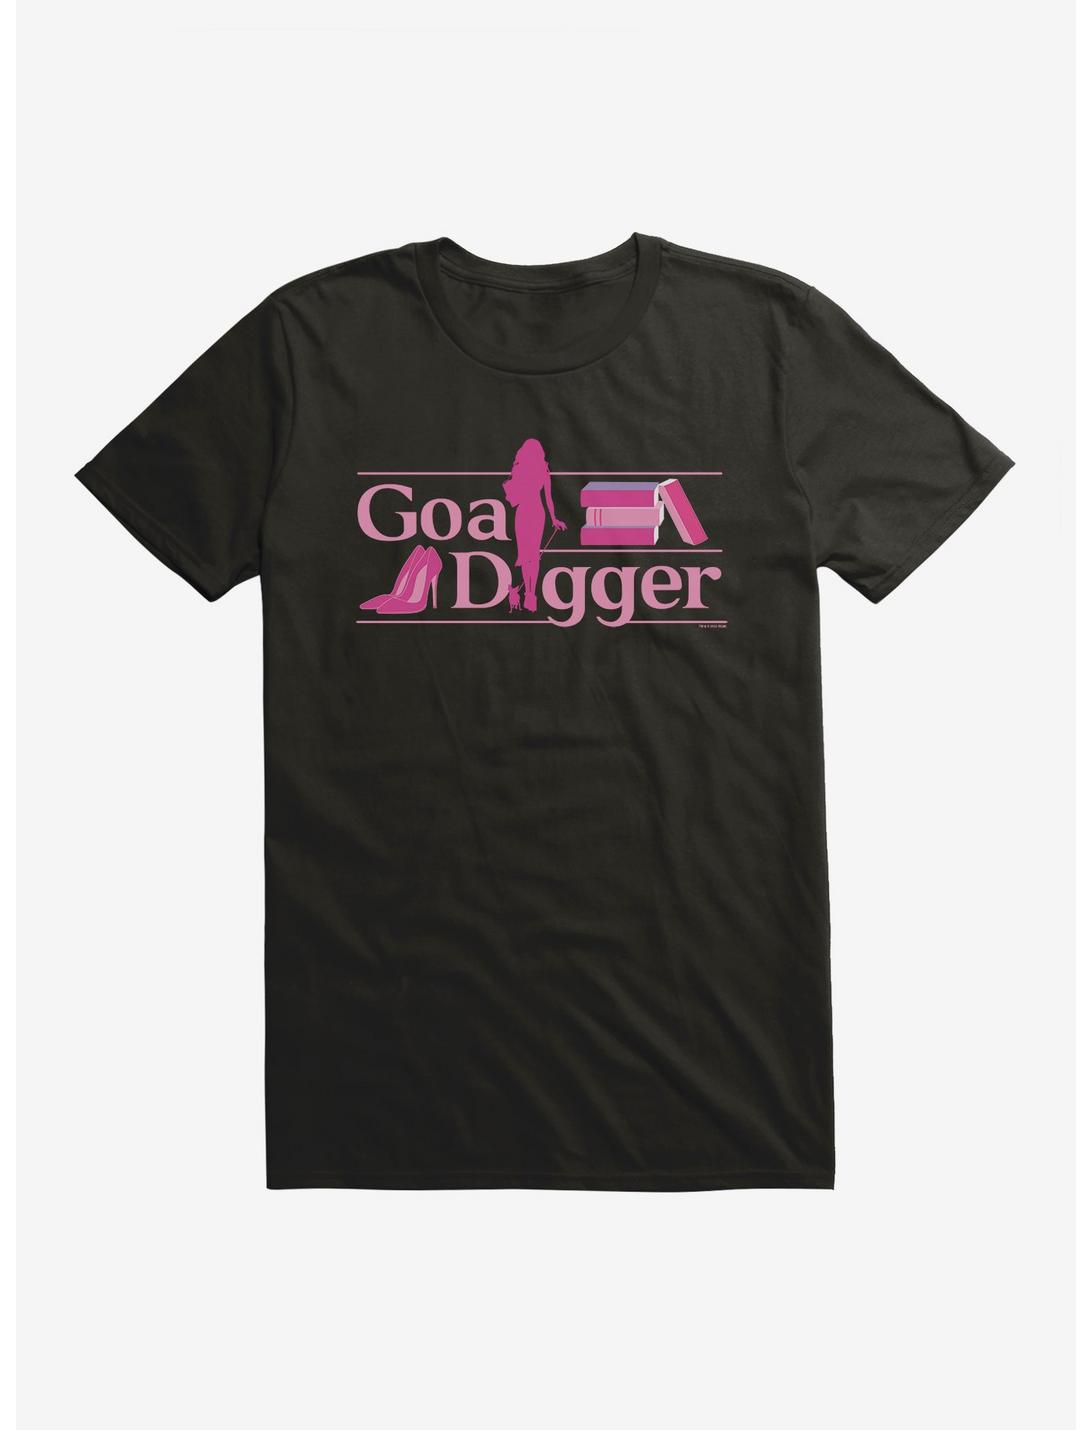 Legally Blonde Goal Digger T-Shirt, , hi-res